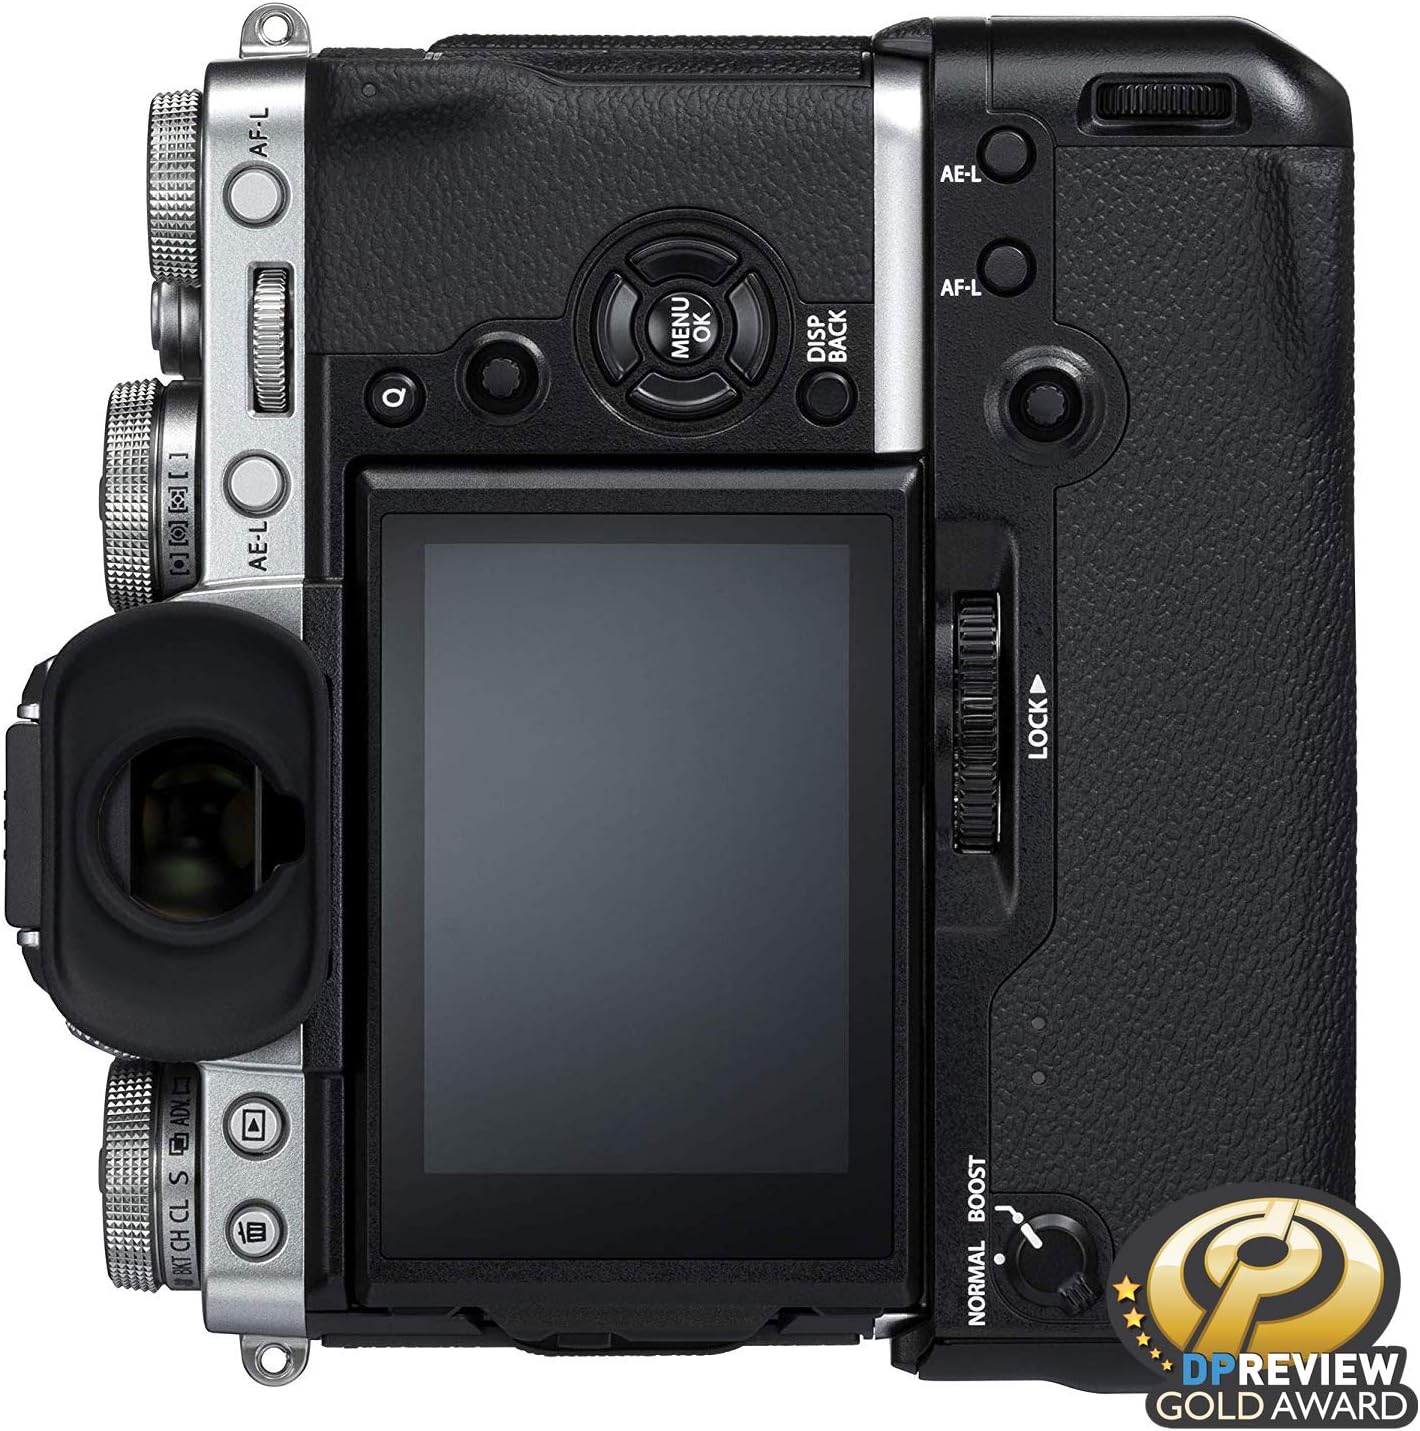 Fujifilm X-T3 Mirrorless Digital Camera: A Versatile and Powerful Photography Tool